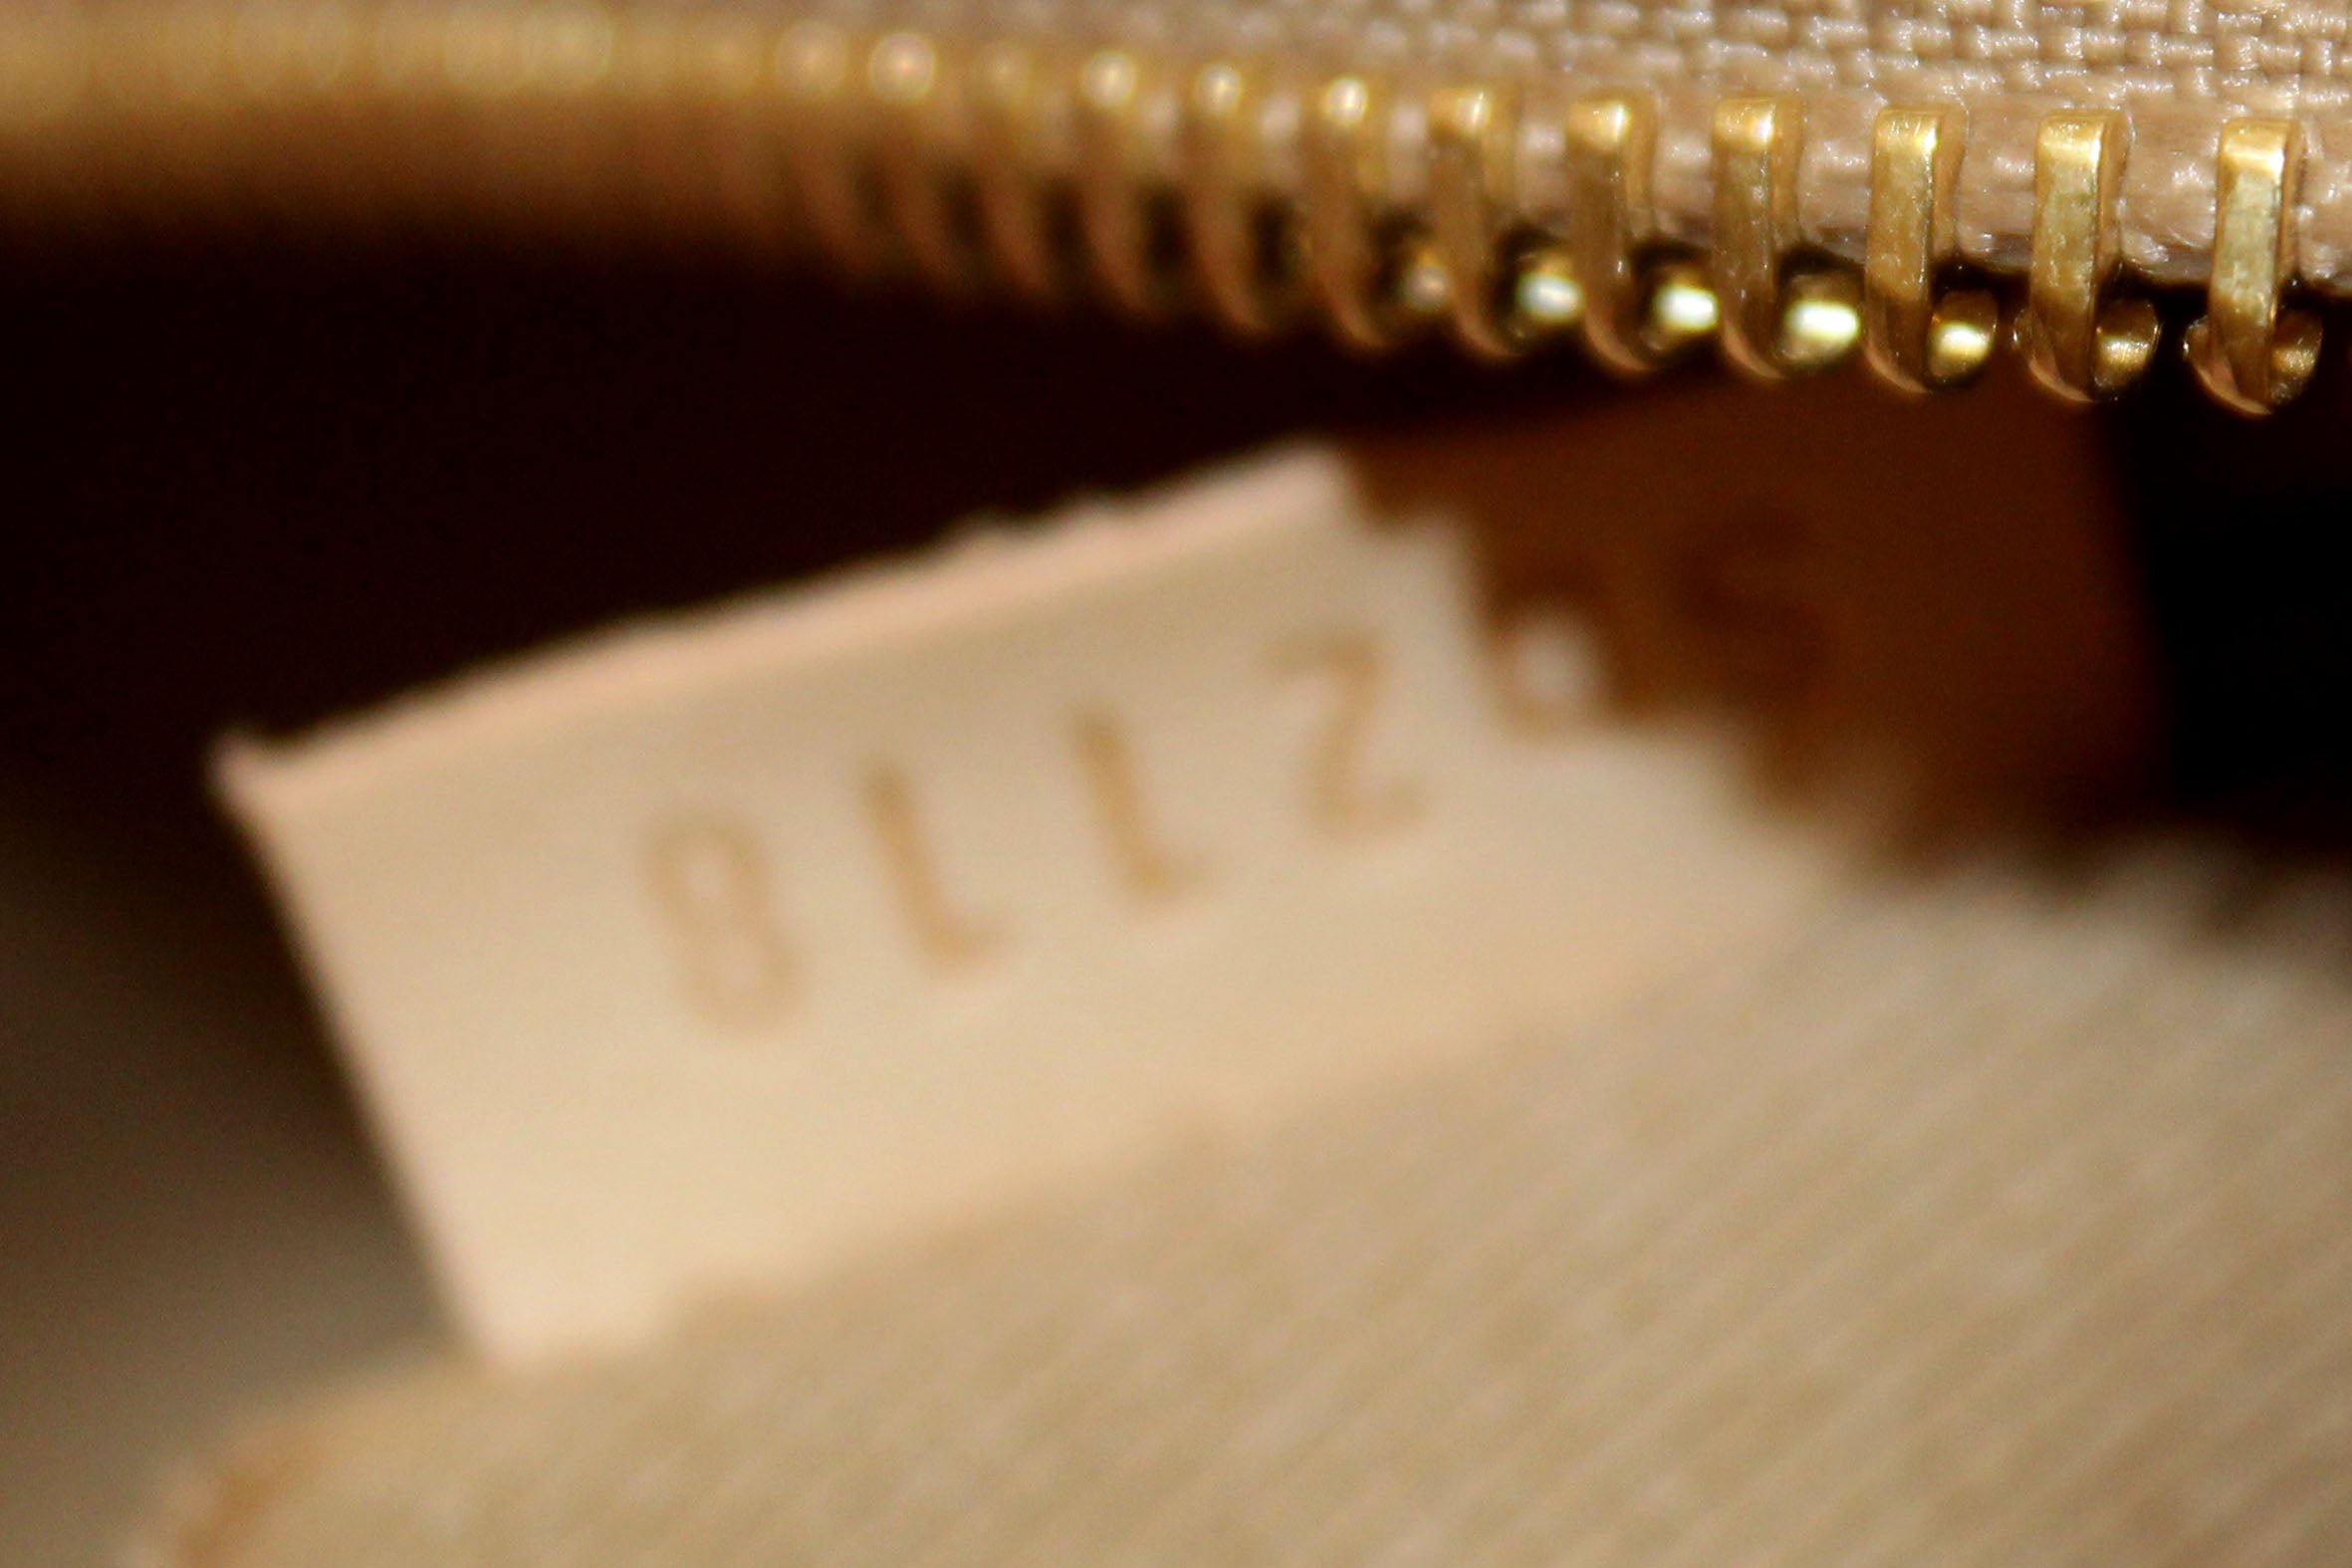 Louis Vuitton Graceful PM M43700 – Timeless Vintage Company